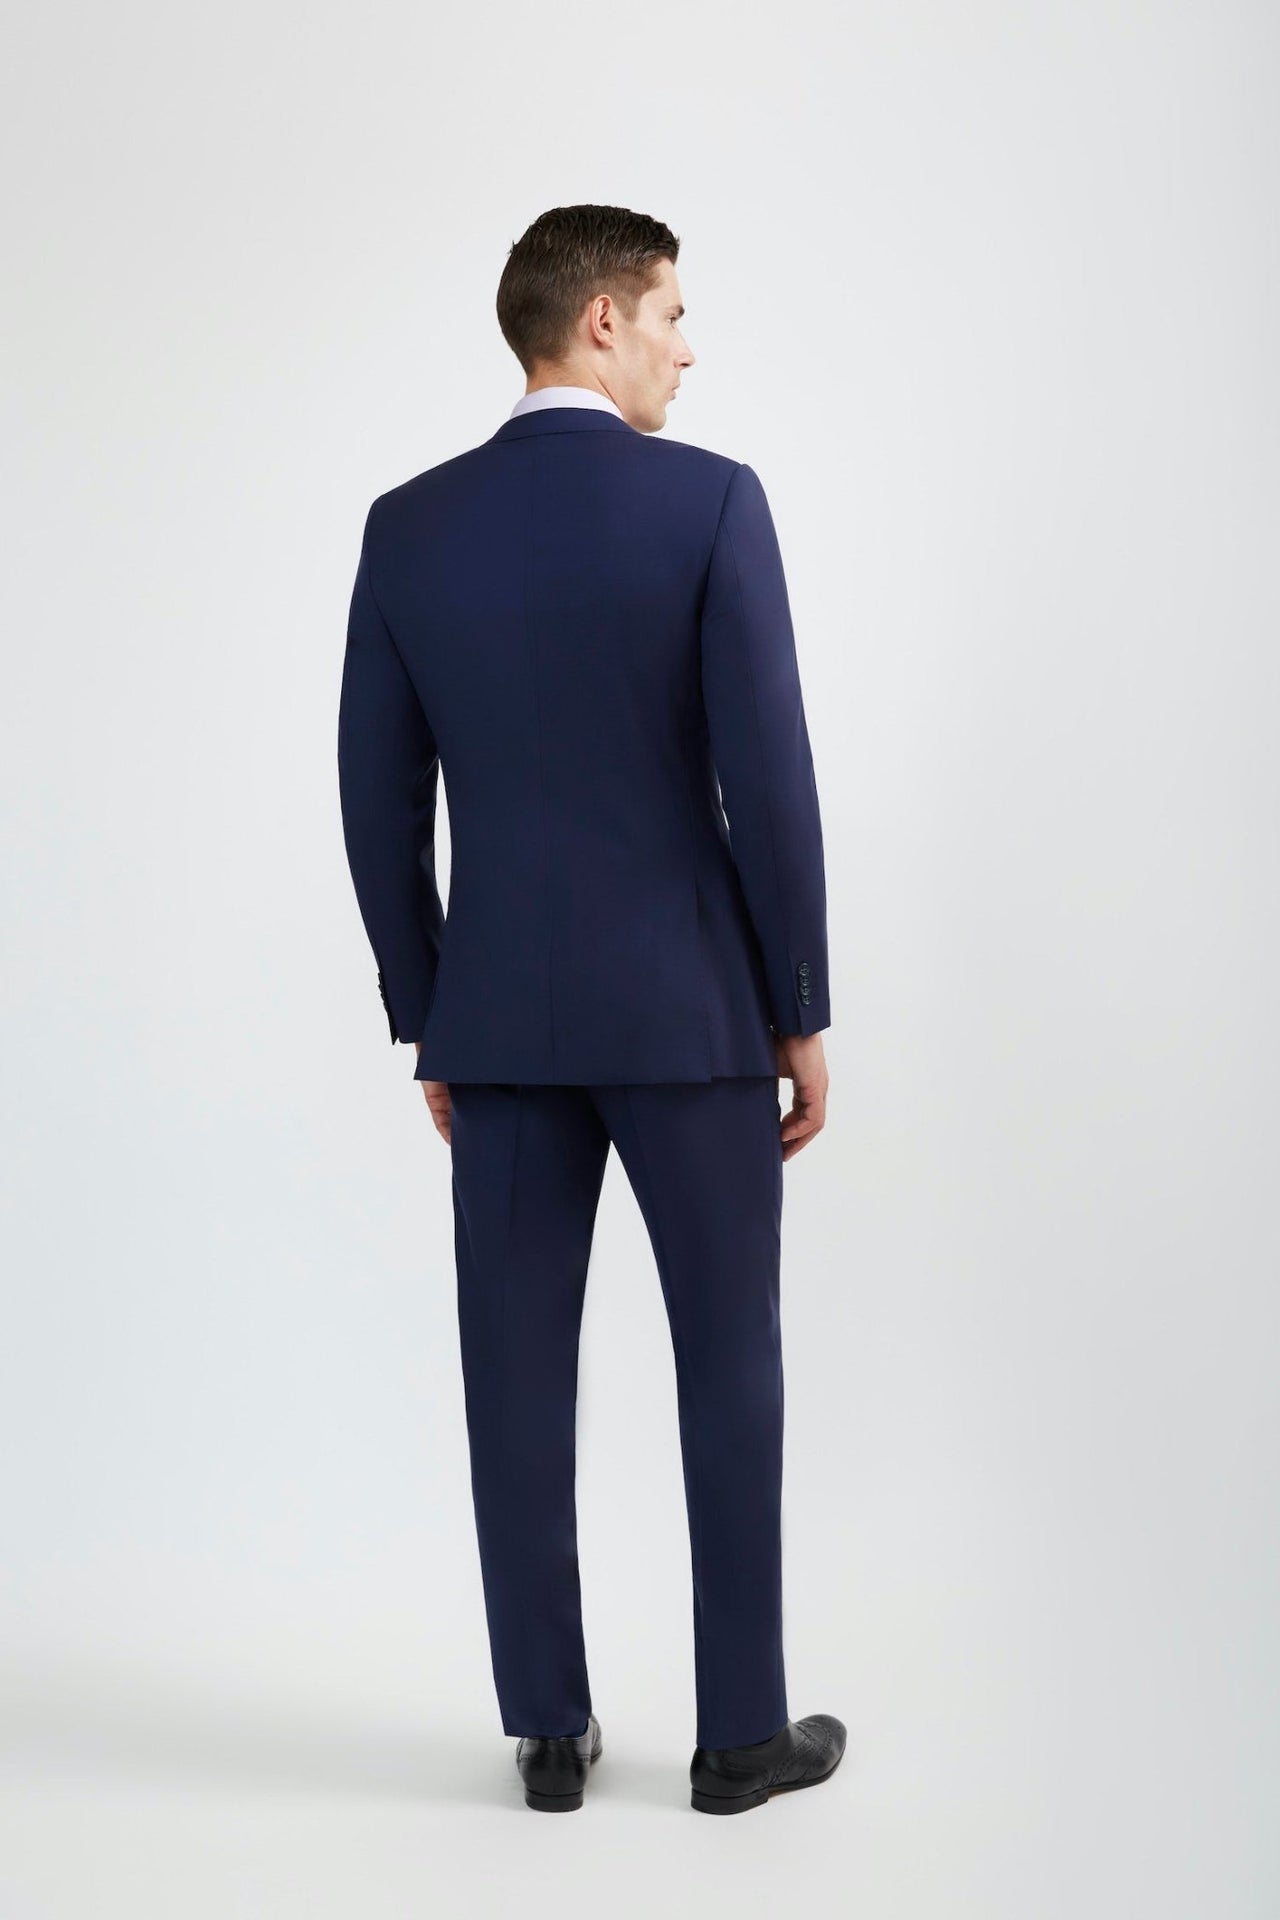 Luxurious 100% Super Fine Wool Italian Cut Beautiful Blue Suit for Men - Tomasso Black